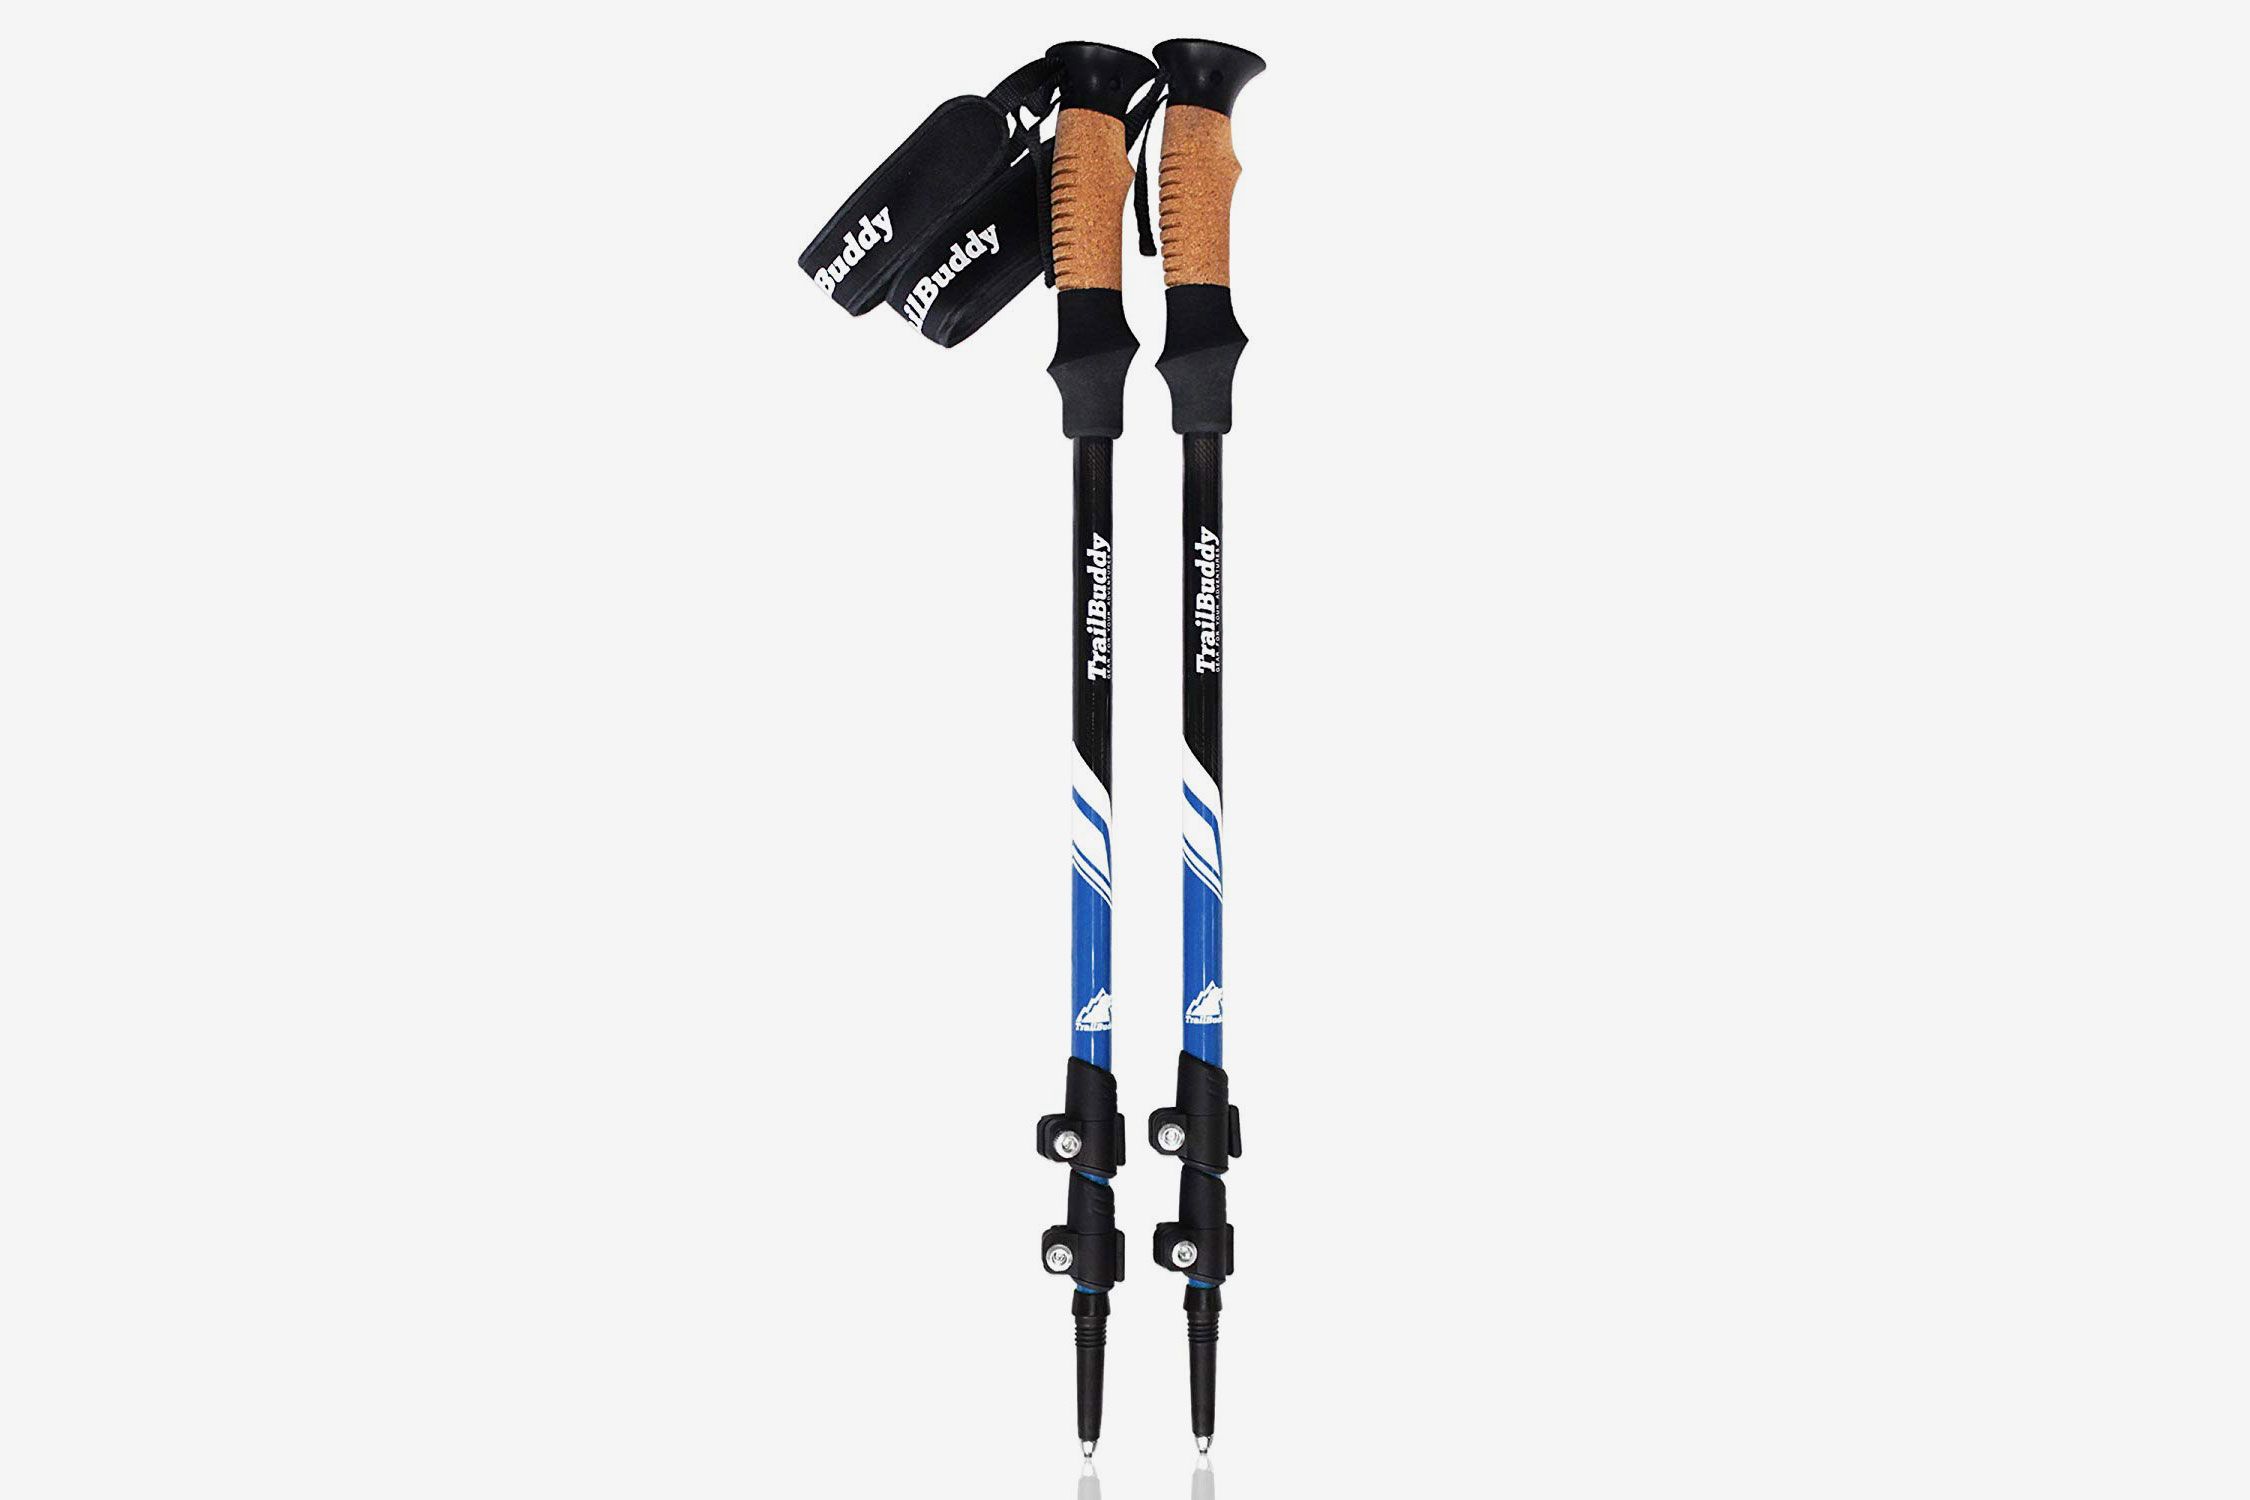 Lightweight Telescopic Walking Sticks FitTrek Trekking Poles Adjustable Ultralight Collapsible Hiking Poles for Climbing 2-pc//Pack